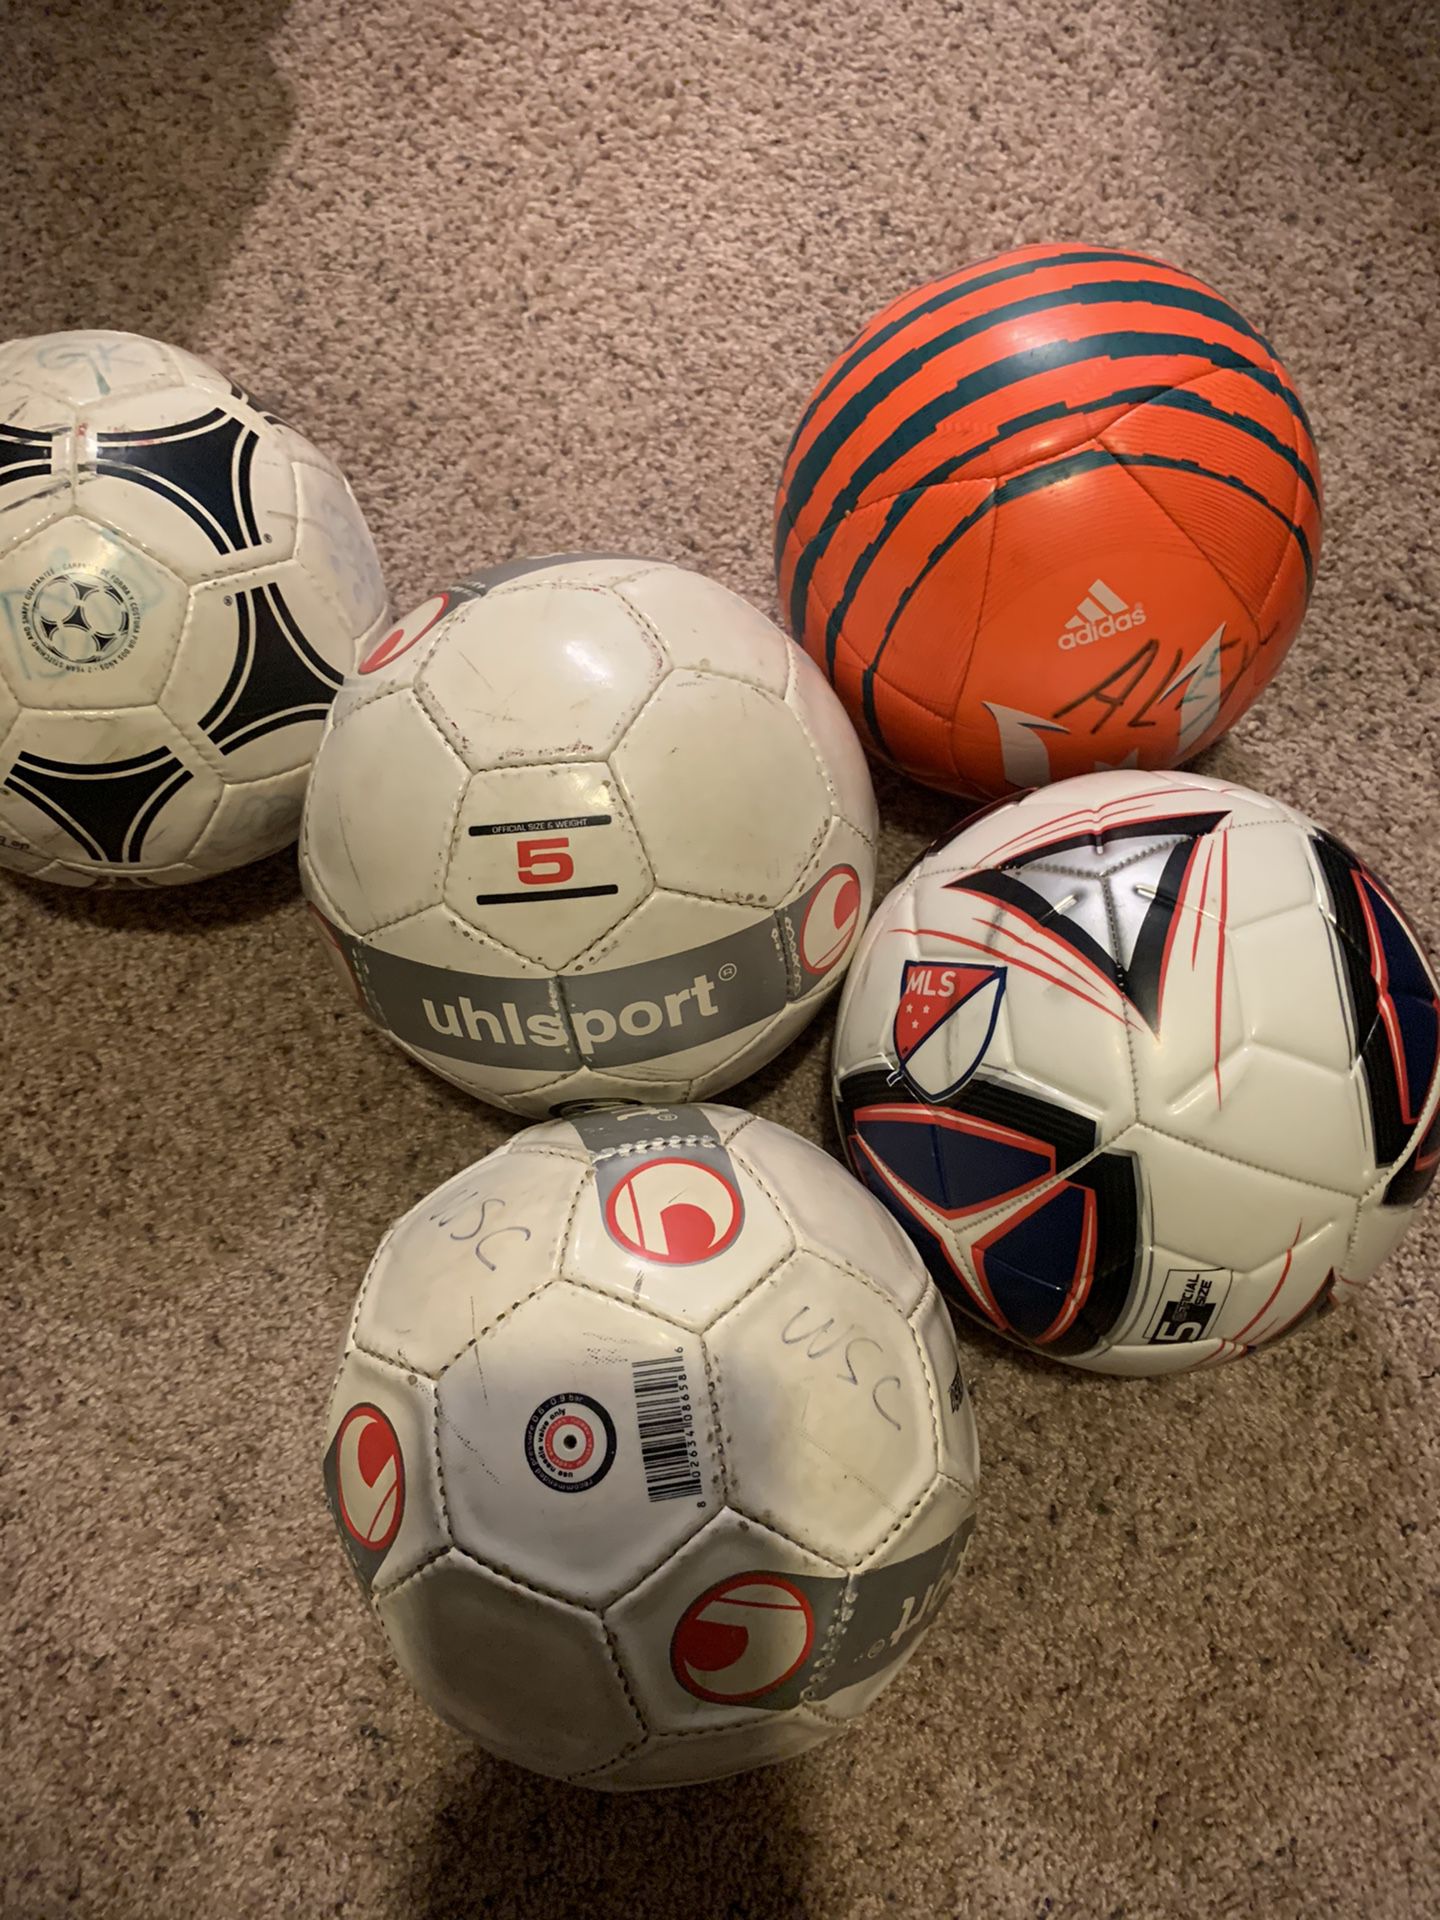 Variety of used soccer balls